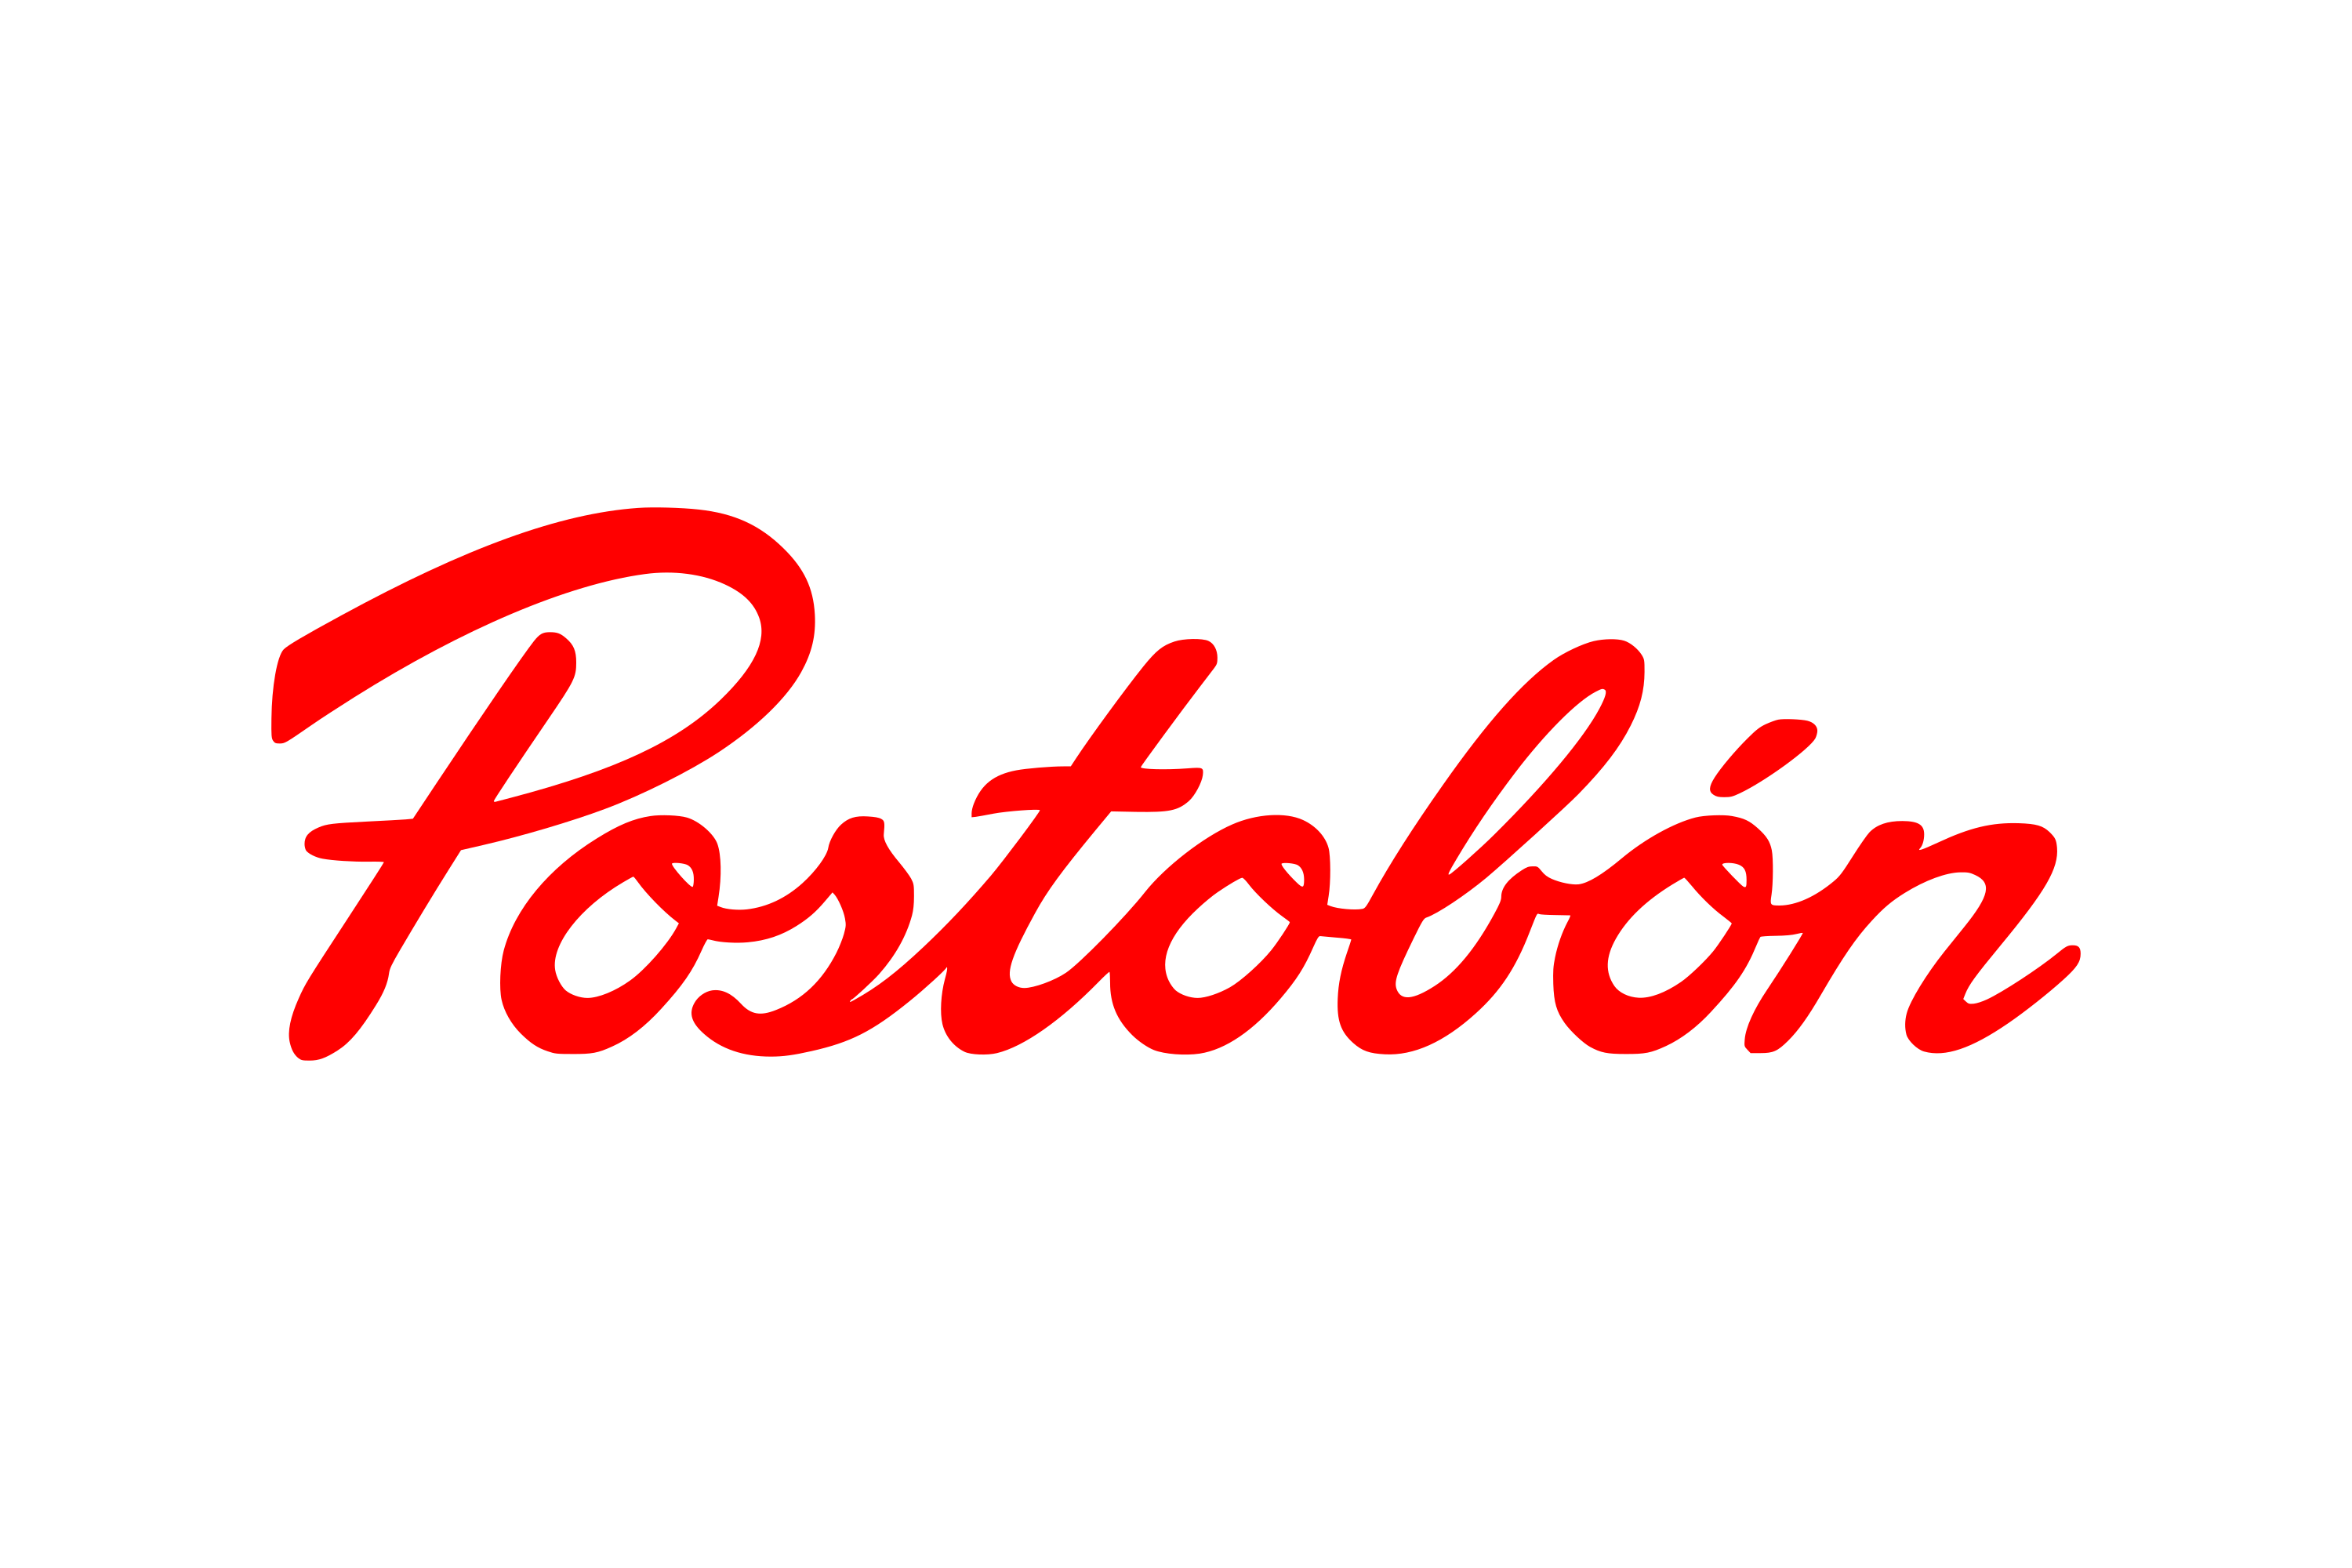 Postobón Logo